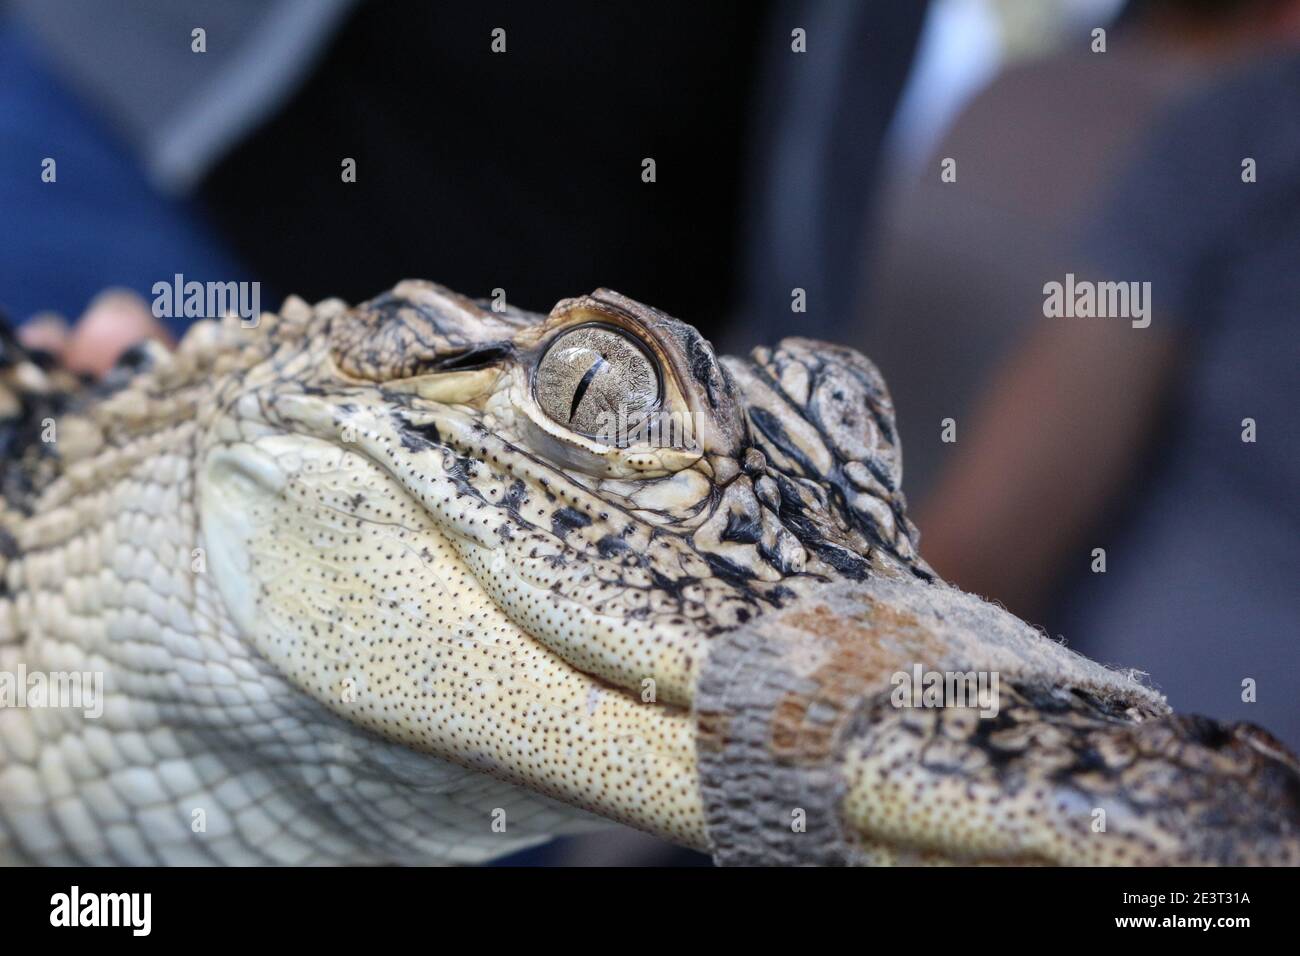 Looking into an Alligators eye Stock Photo